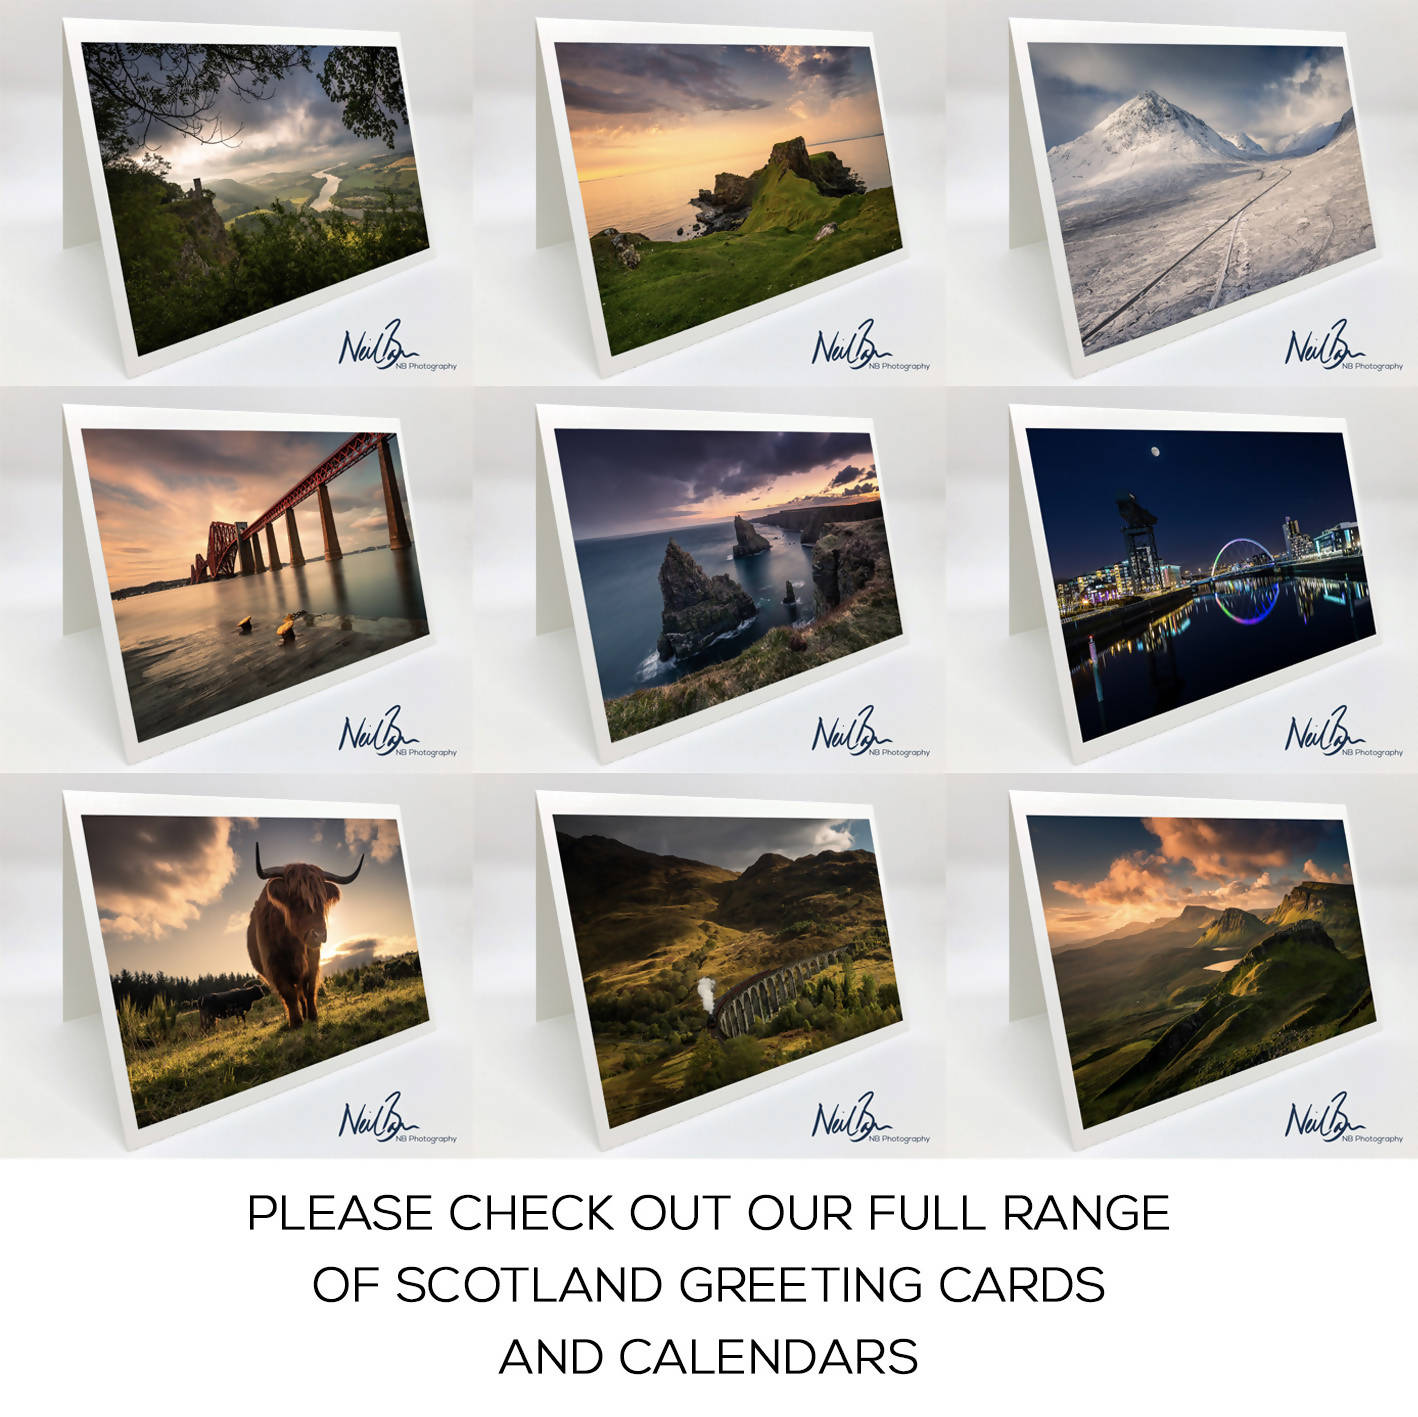 Shieldaig, Wester Ross - Scotland Greeting Card - Blank Inside